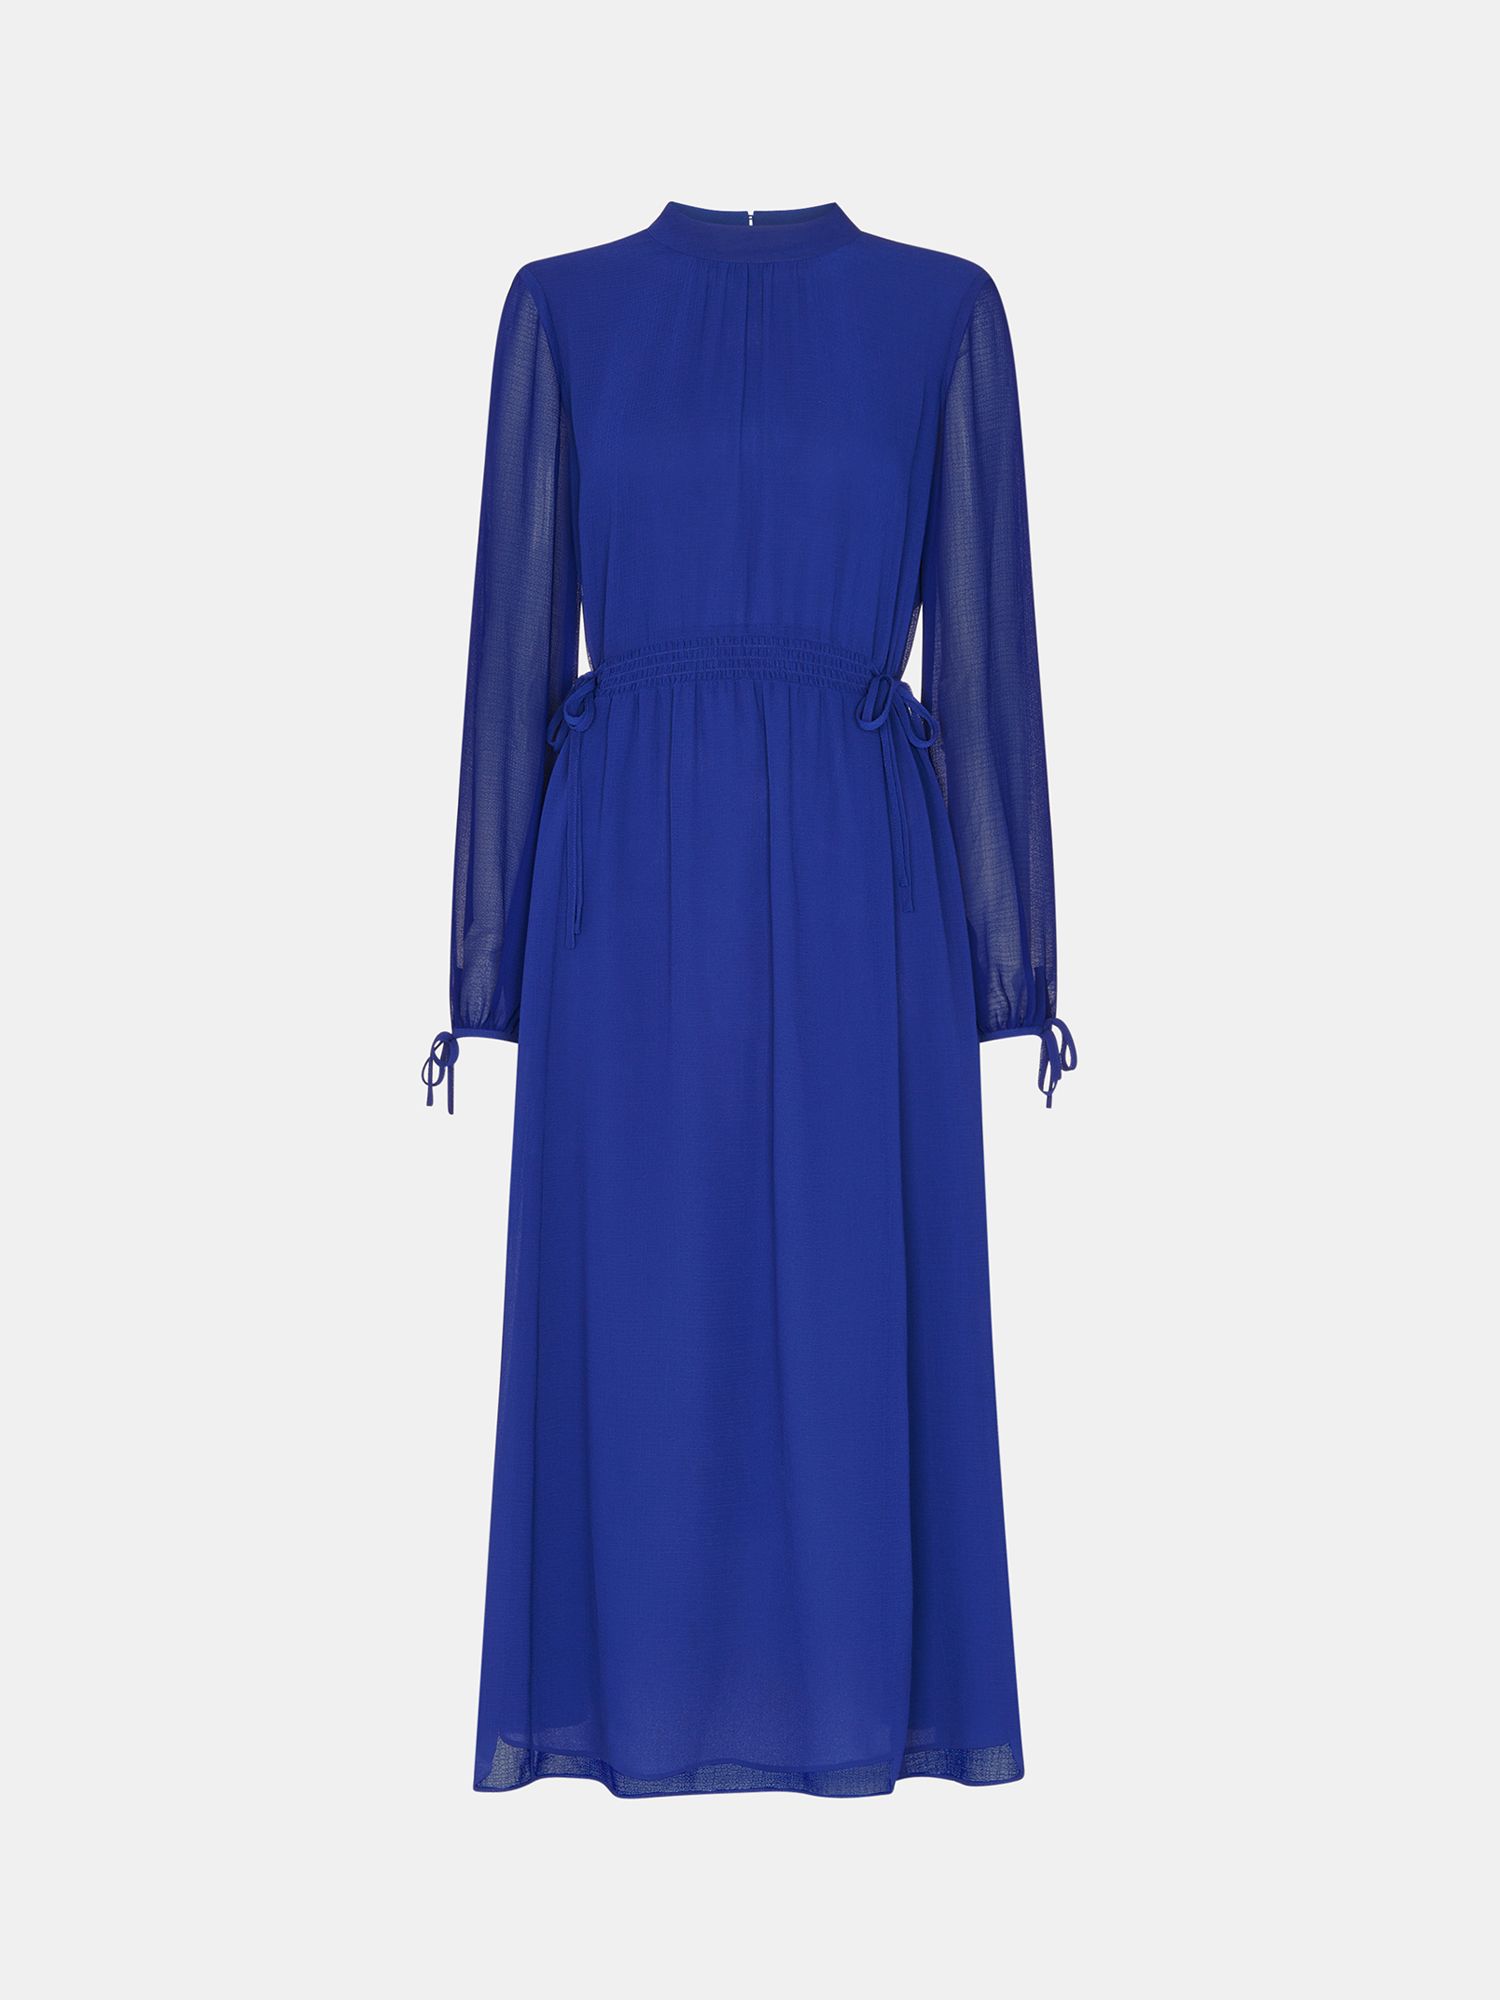 Whistles Ivy Midi Dress, Blue at John Lewis & Partners